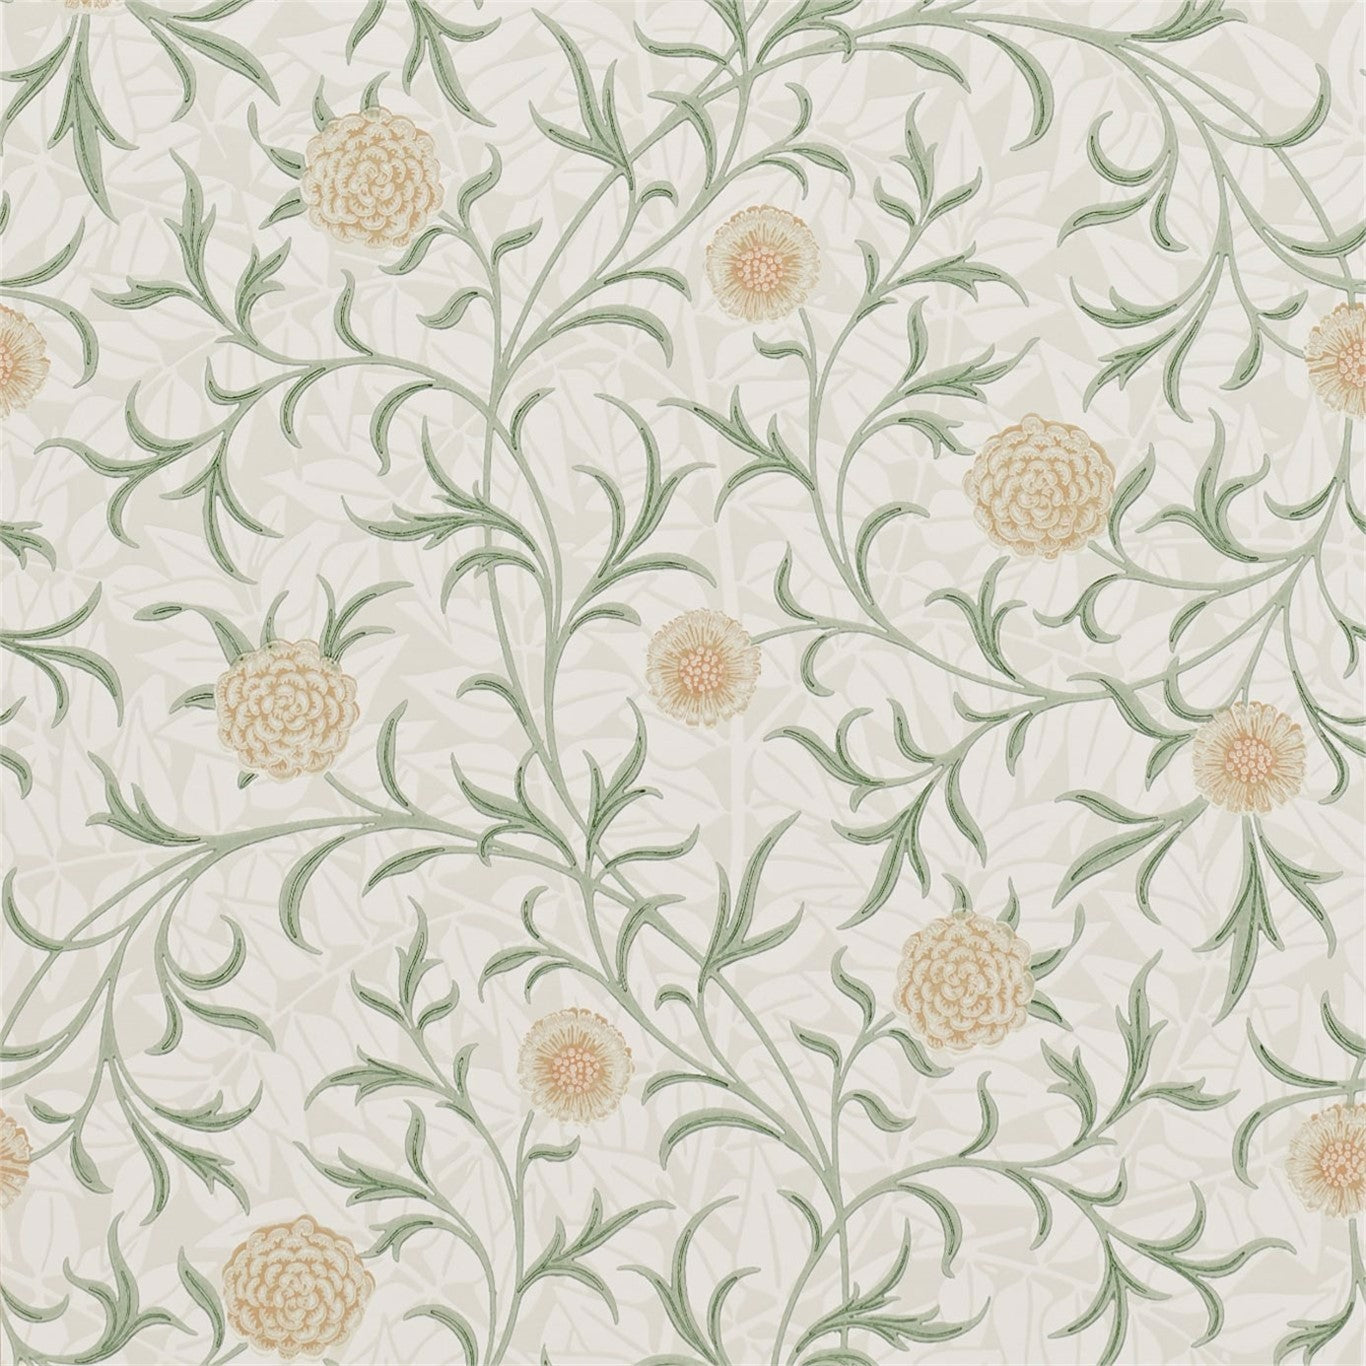 Scroll Thyme/Pear Wallpaper DMCR216473 by Morris & Co